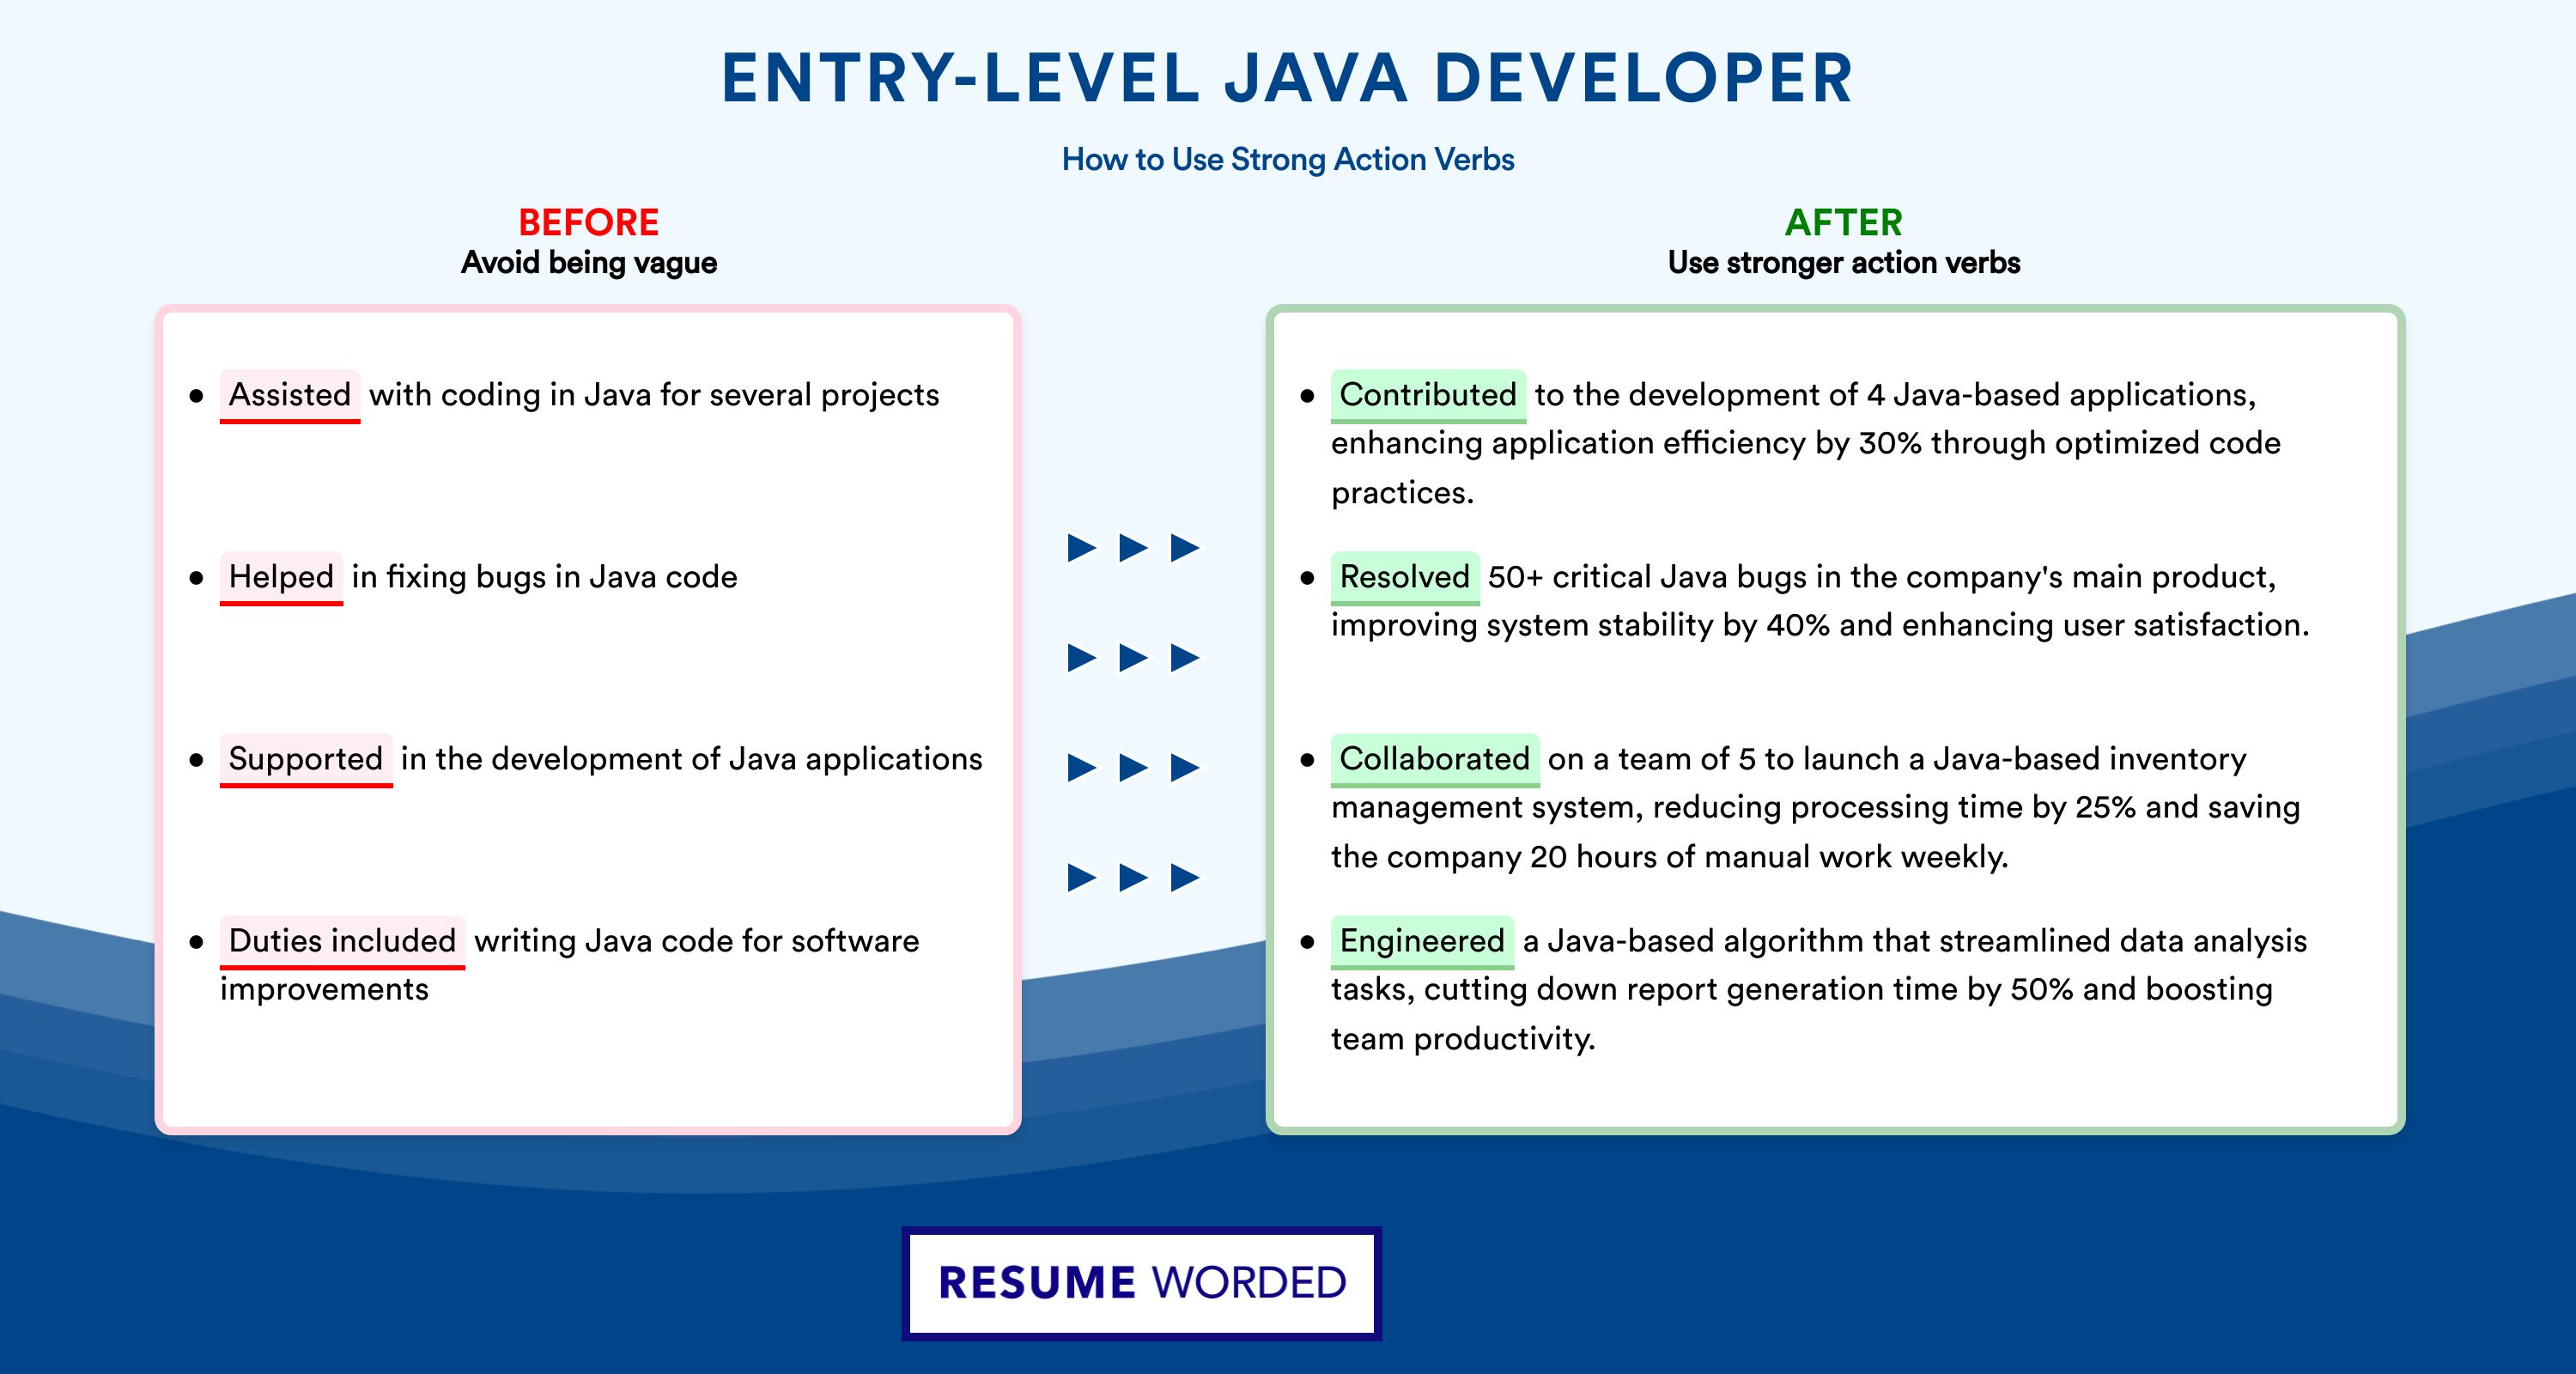 Action Verbs for Entry-Level Java Developer